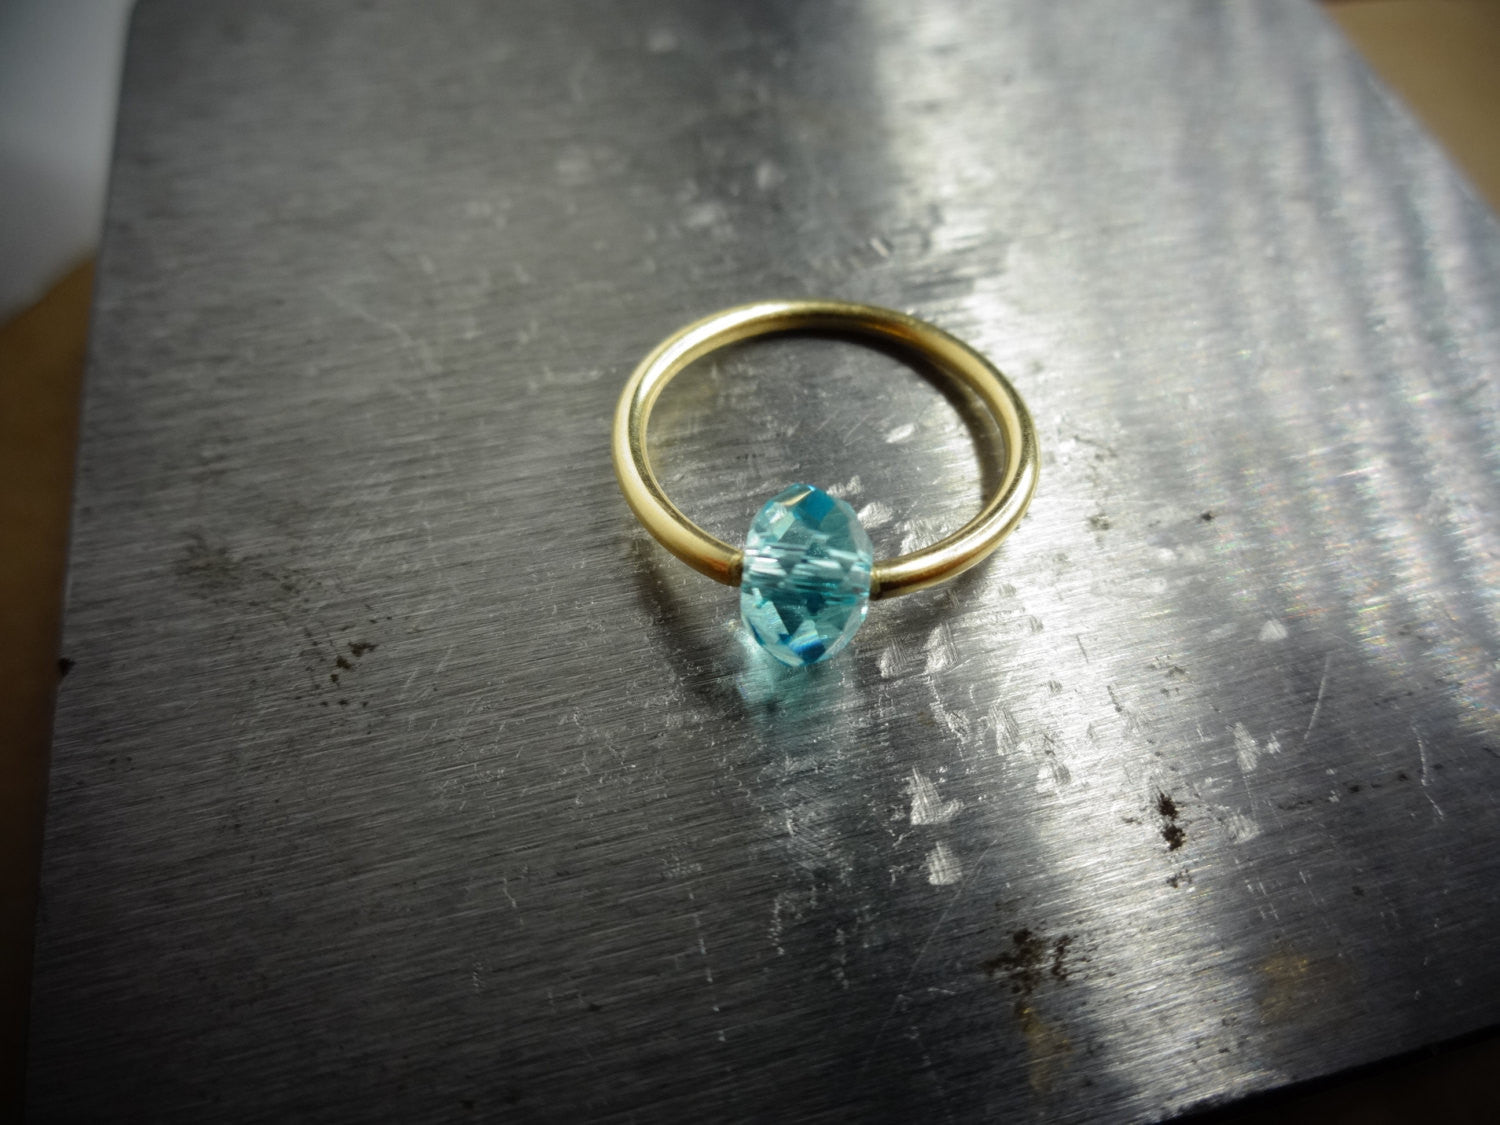 Captive Bead Ring made with BLUE TOPAZ Swarovski Crystal - 16 ga Hoop - 14k Gold (Y, W, or R), Sterling Silver, or Platinum